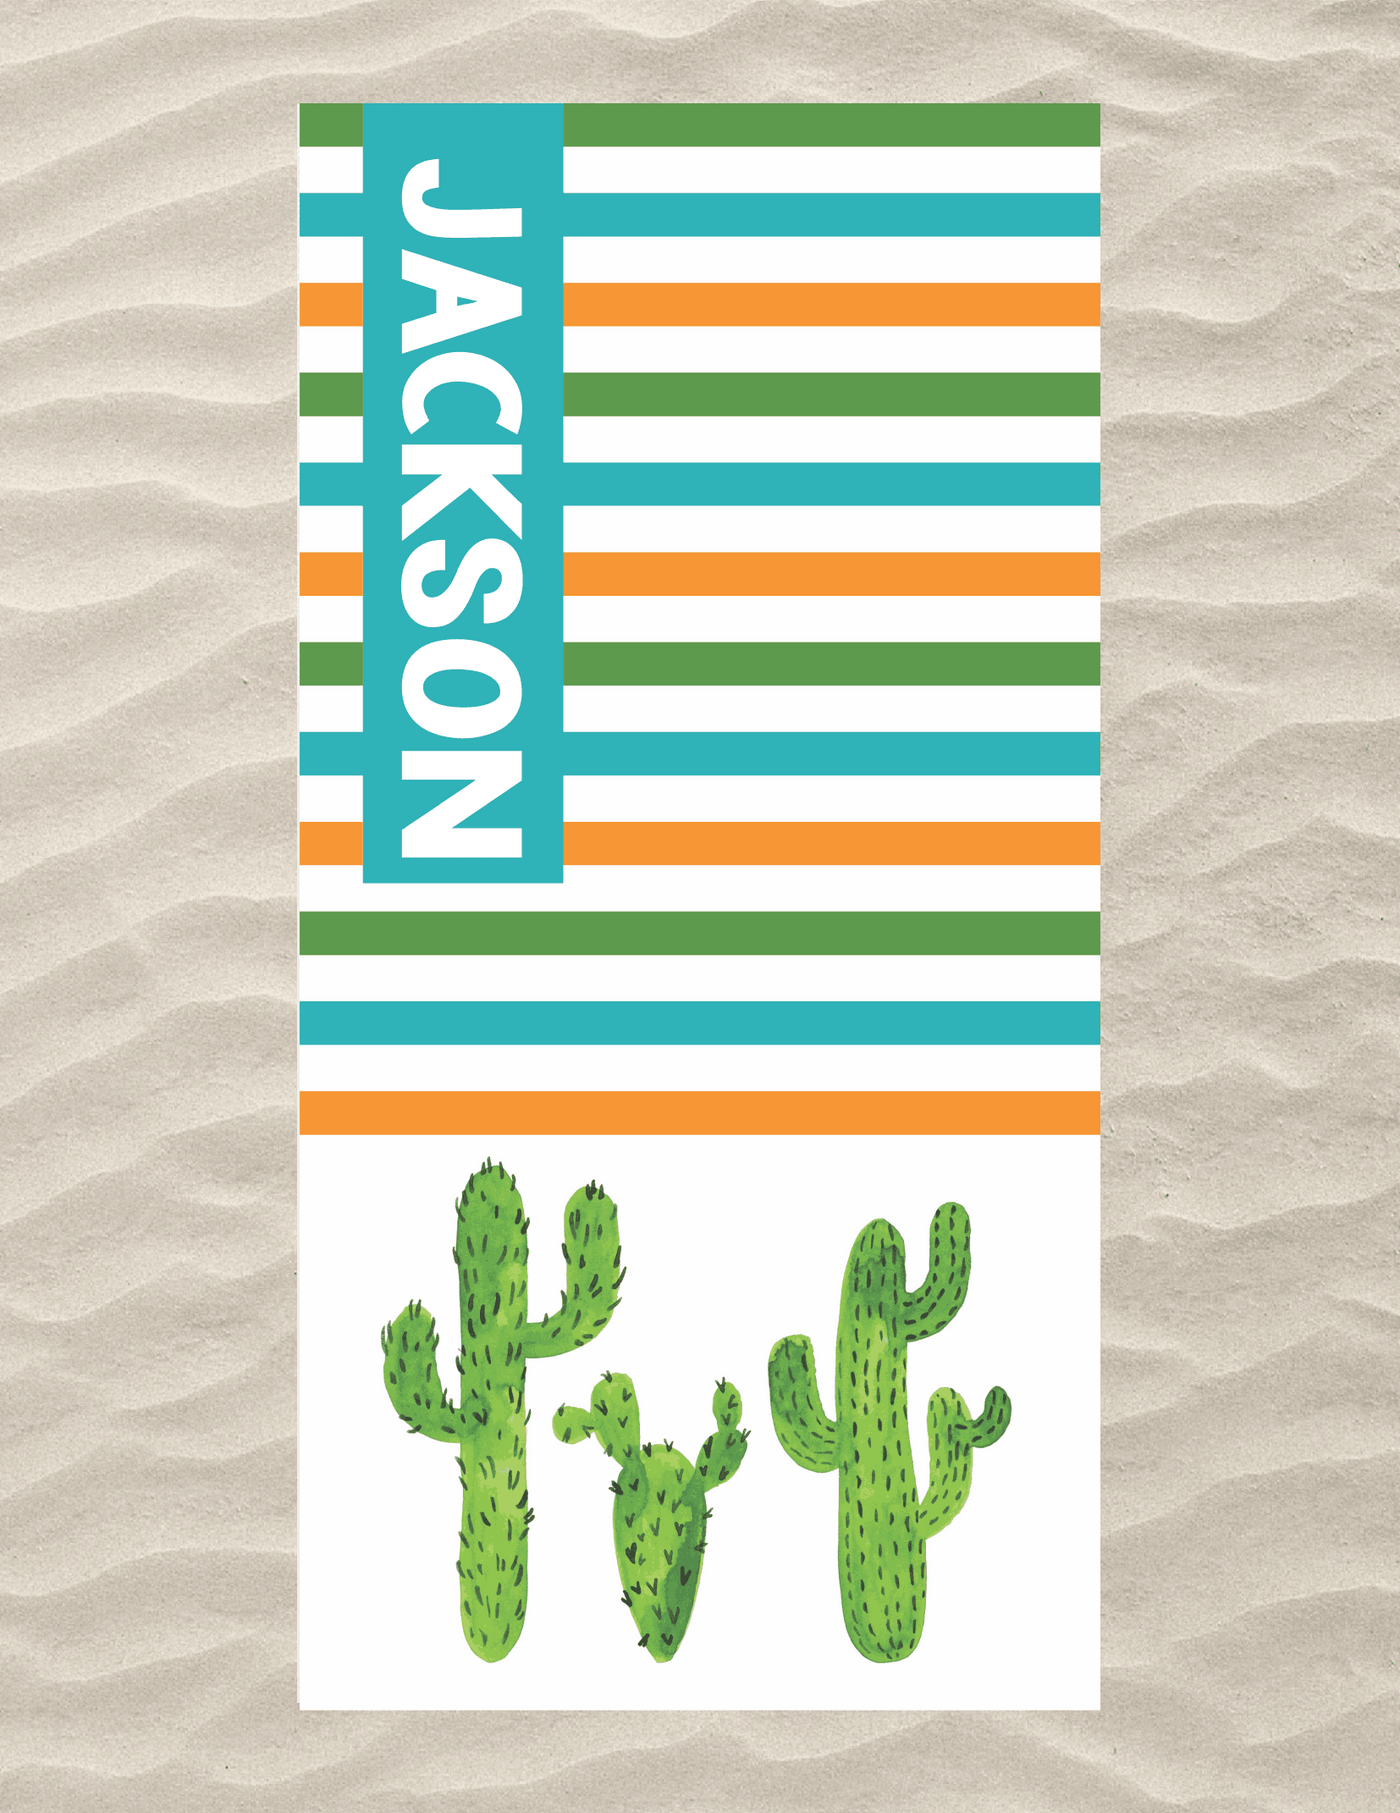 Cactus Beach Towels - Multiple Styles!